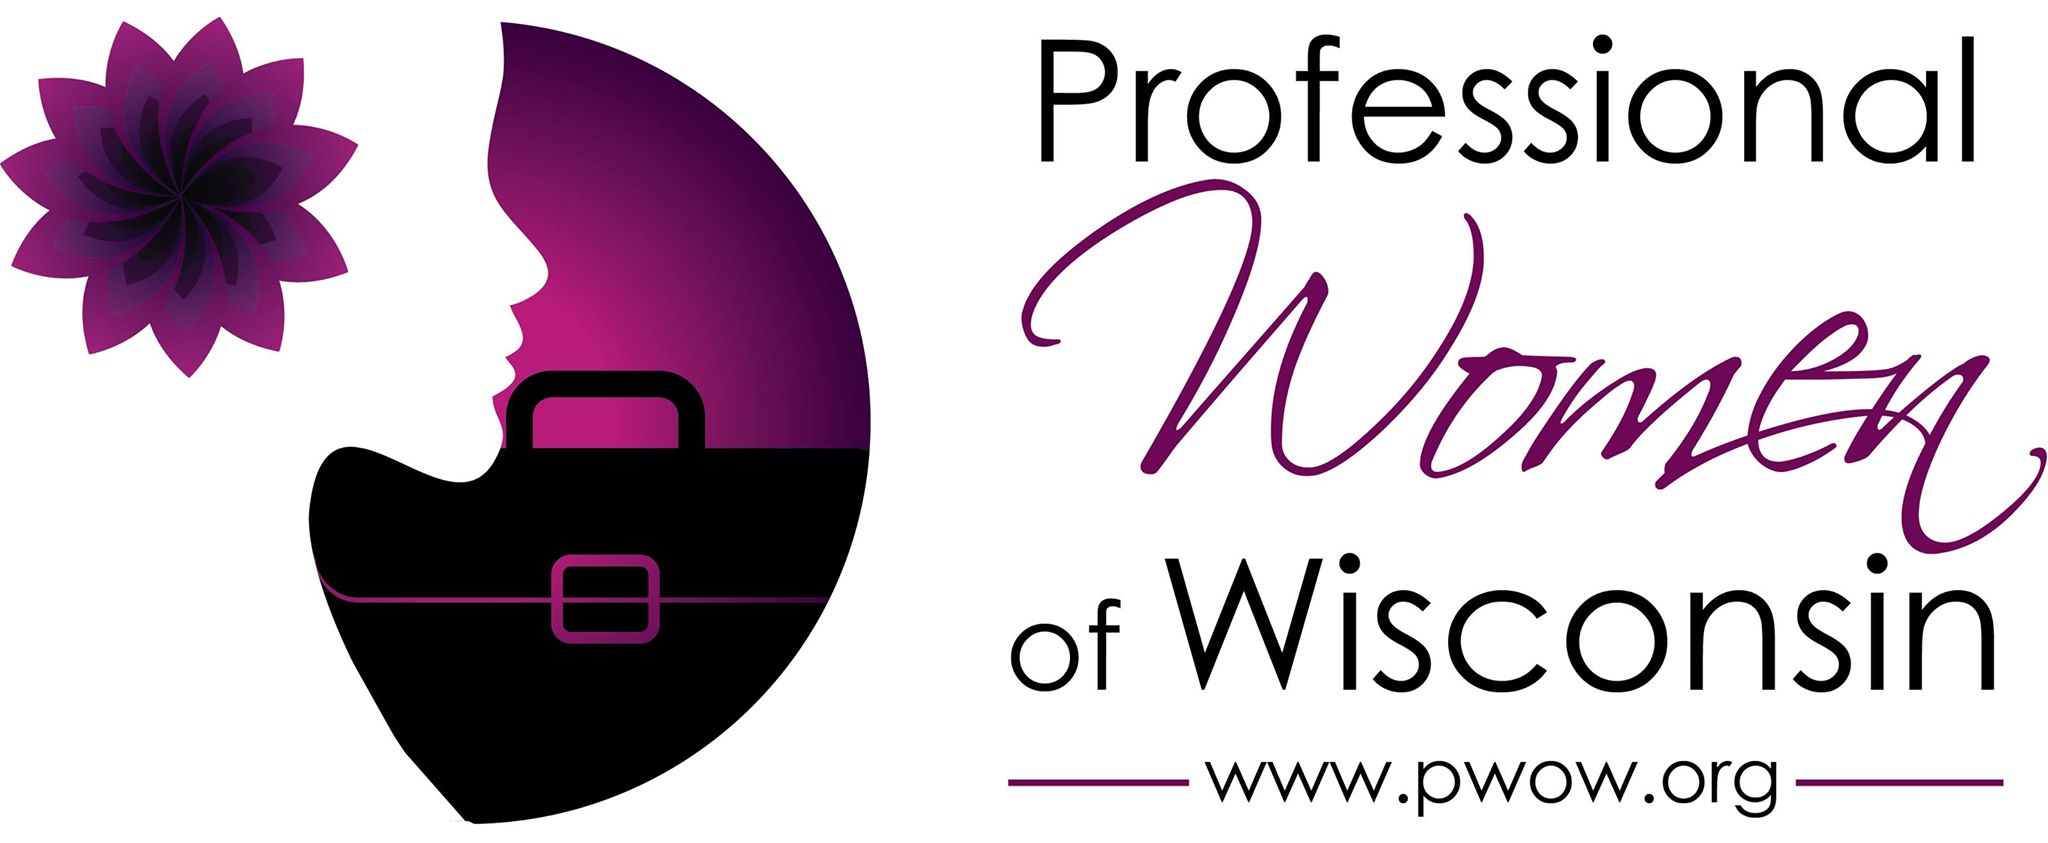 Professional Women of Wisconsin Networking